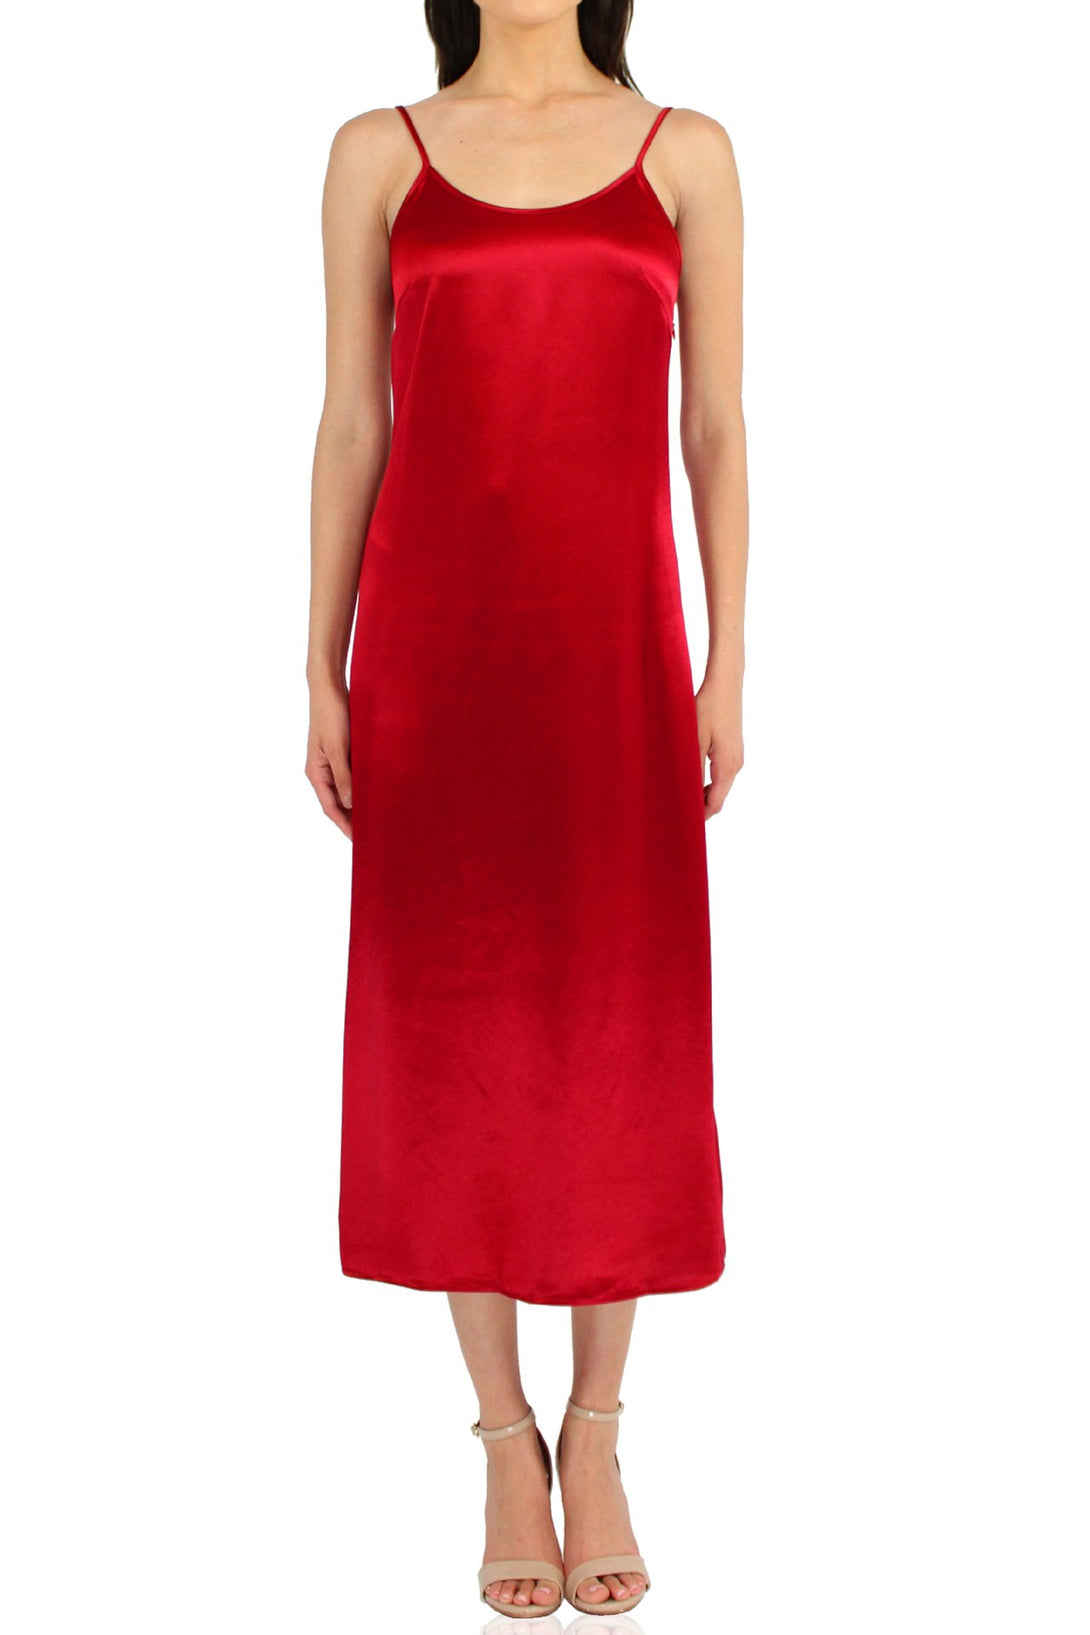 Womens-Designer-Red-Midi-Dress-By-Kyle-Richard